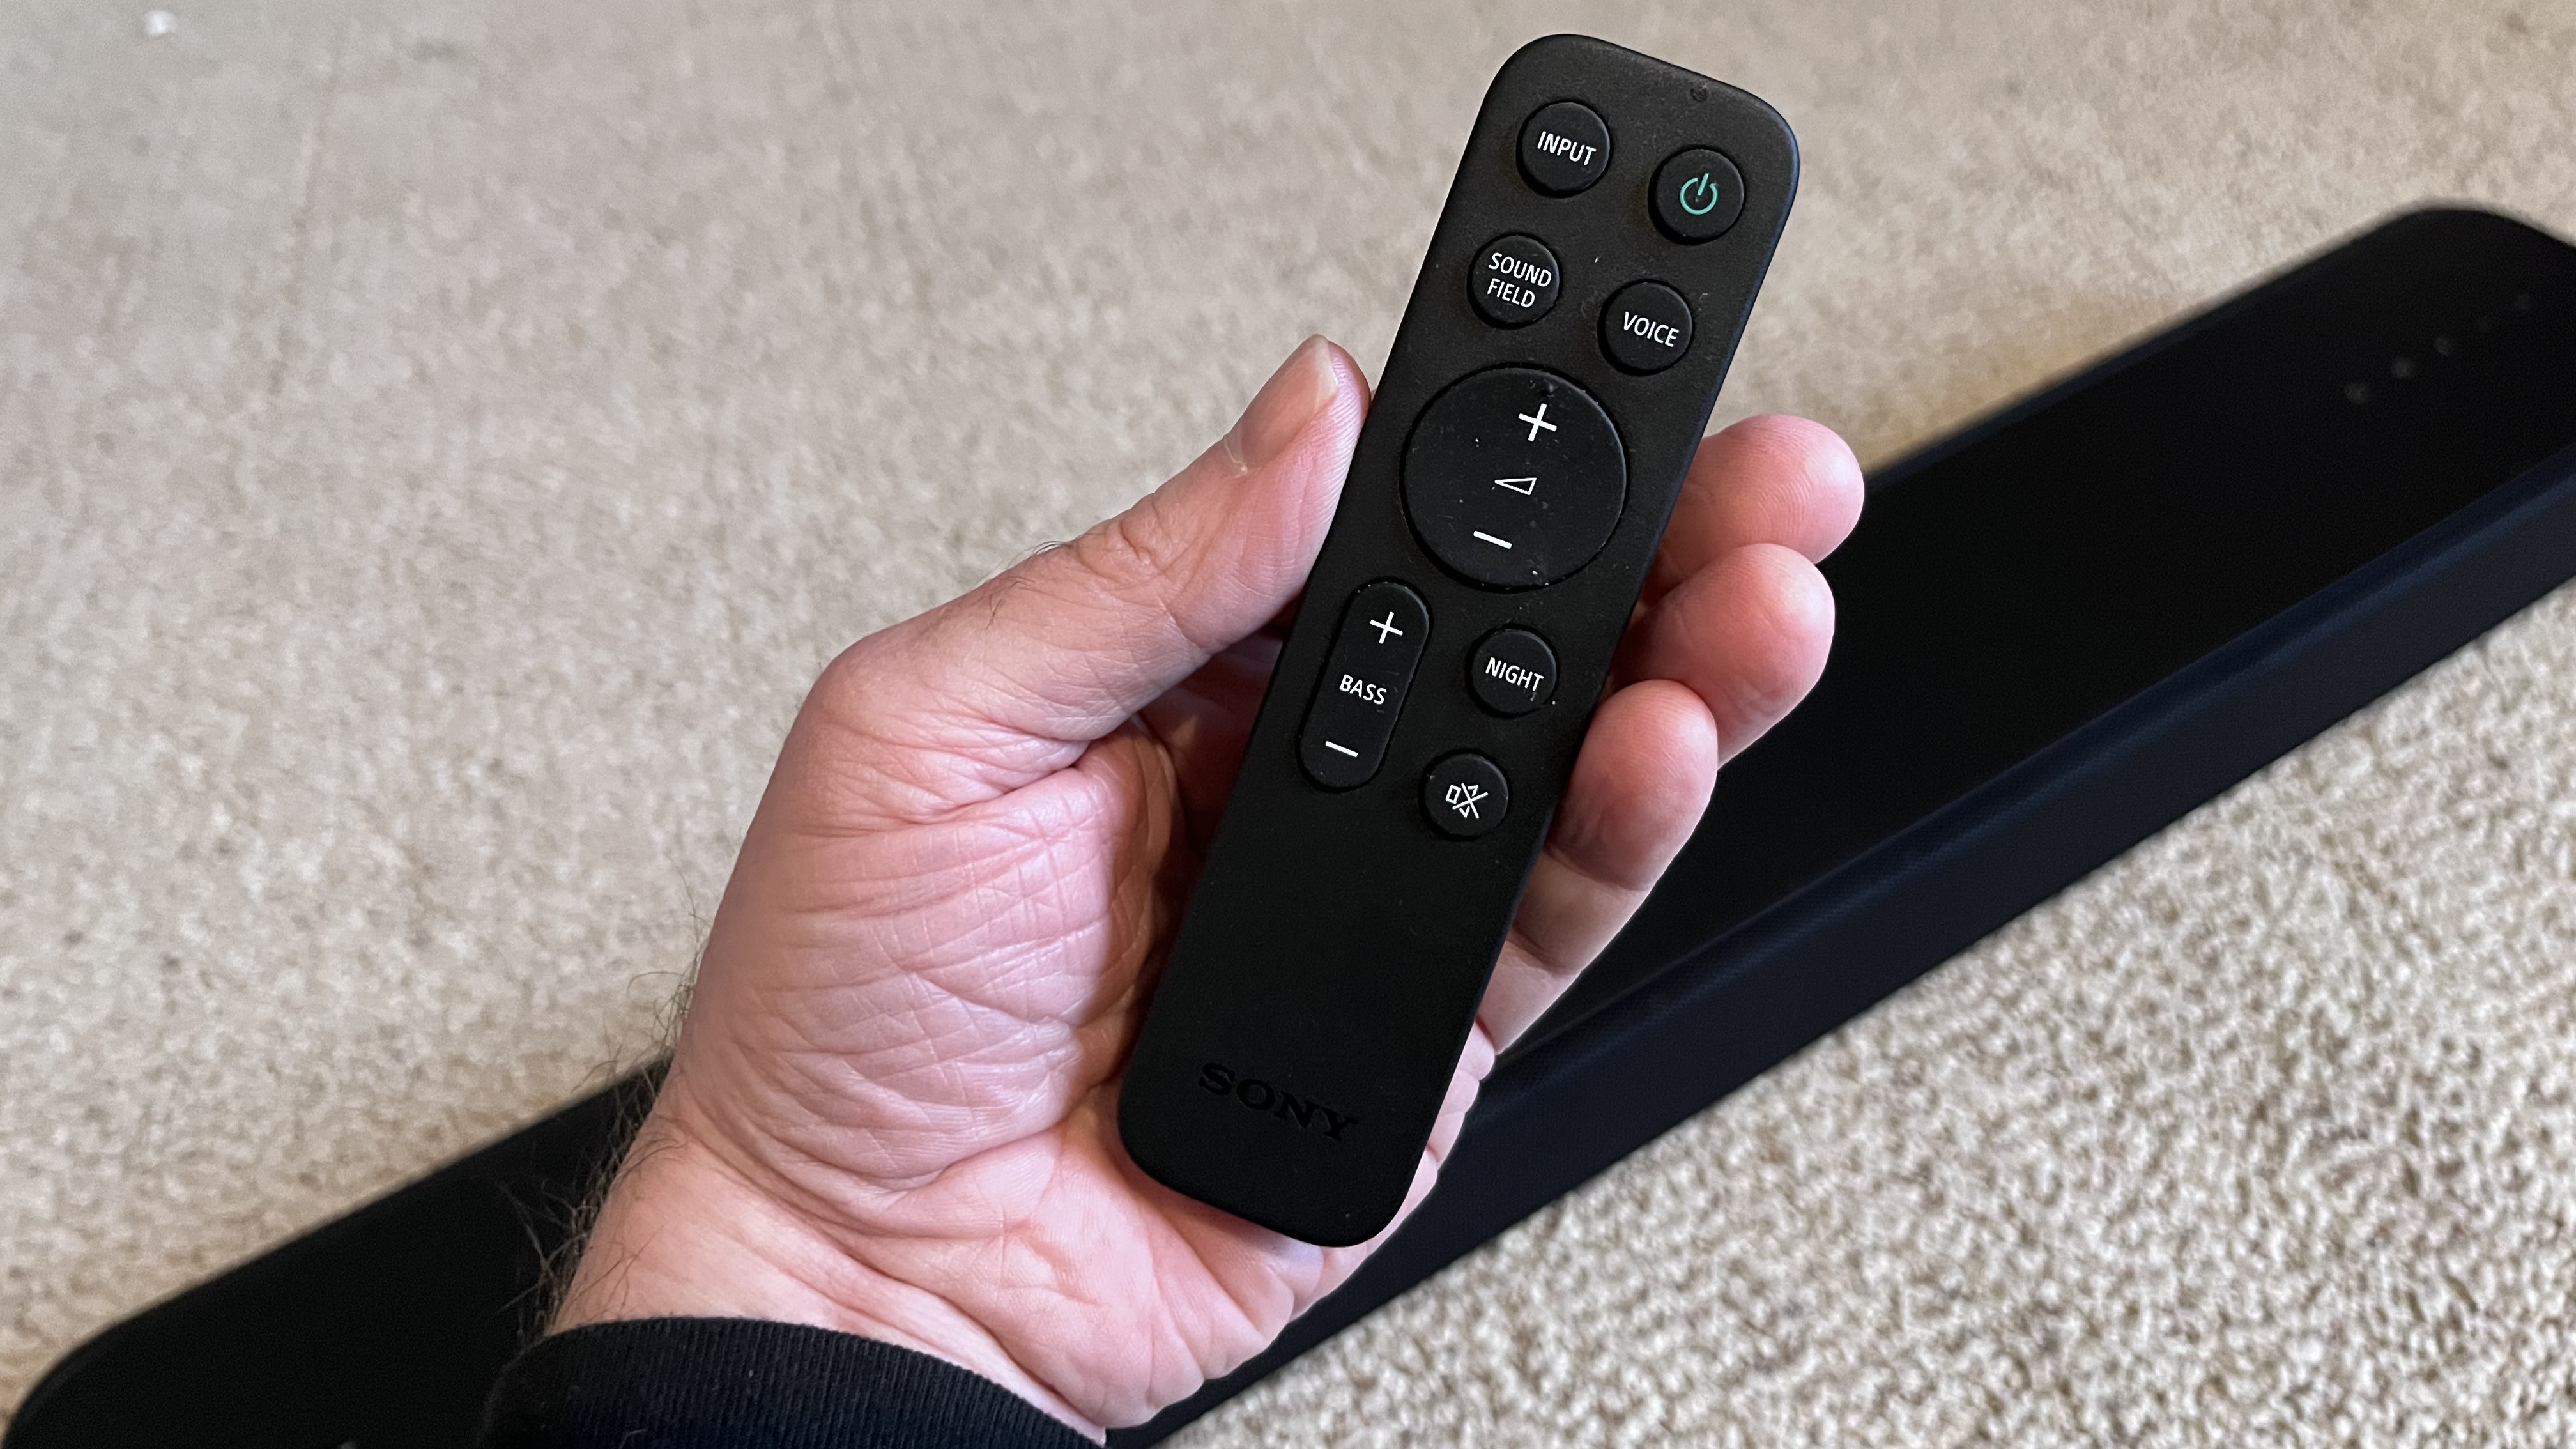 Sony HT-S2000 soundbar remote control held in hand